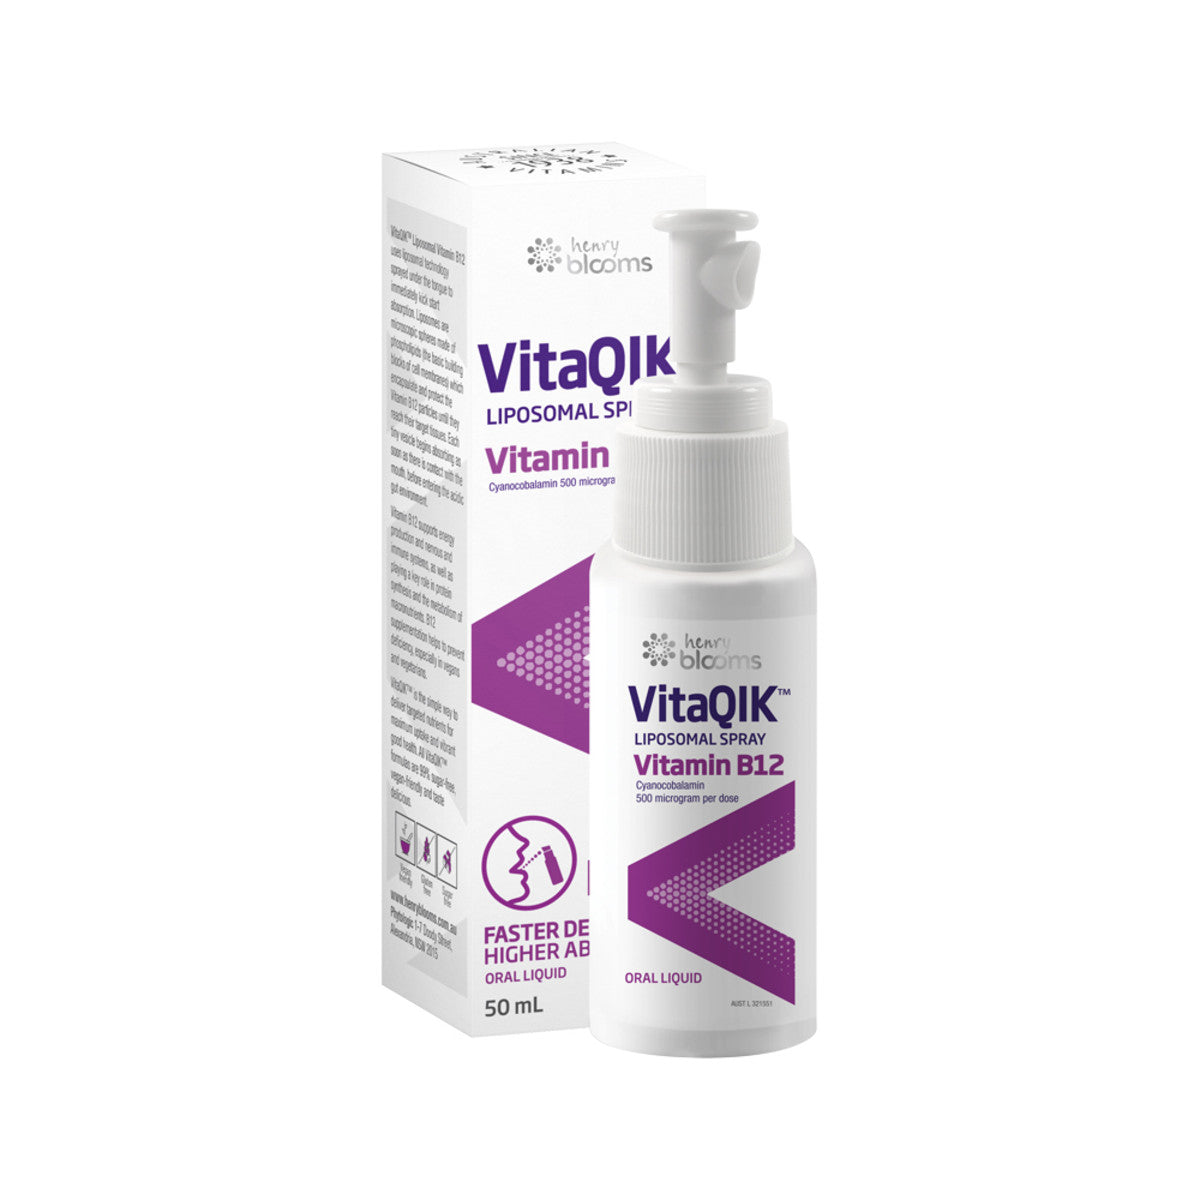 Henry Blooms - VitaQIK Liposomal Spray Vitamin B12